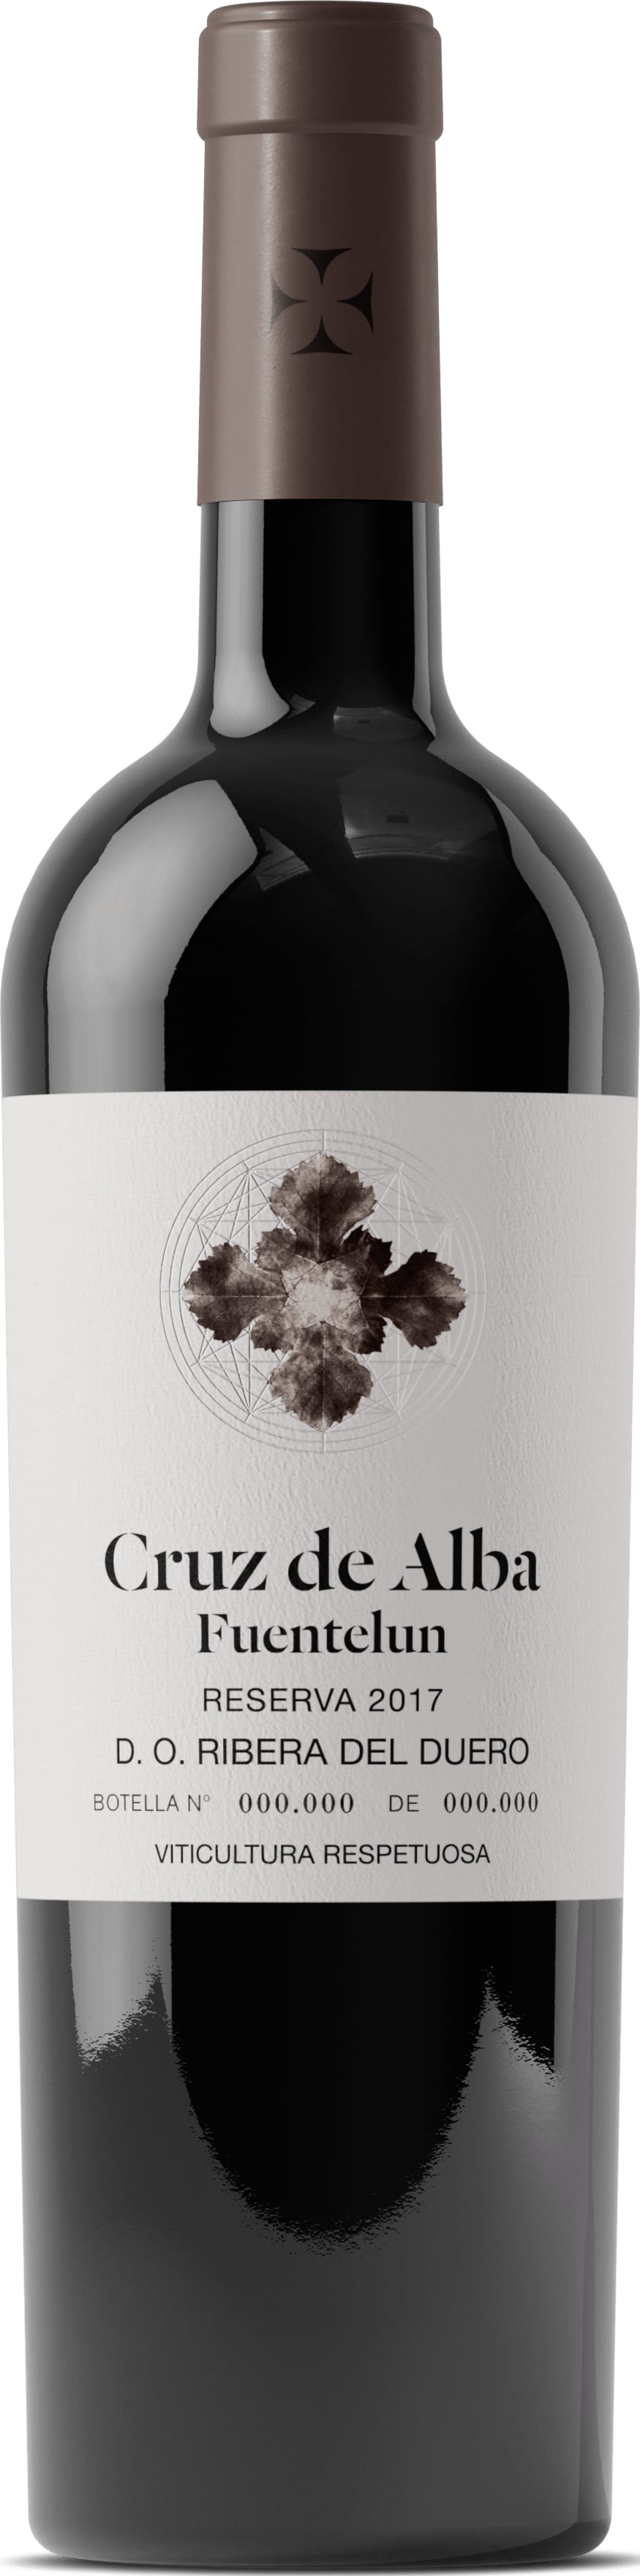 Cruz de Alba Ribera del Duero Reserva 2017 75cl - Buy Cruz de Alba Wines from GREAT WINES DIRECT wine shop